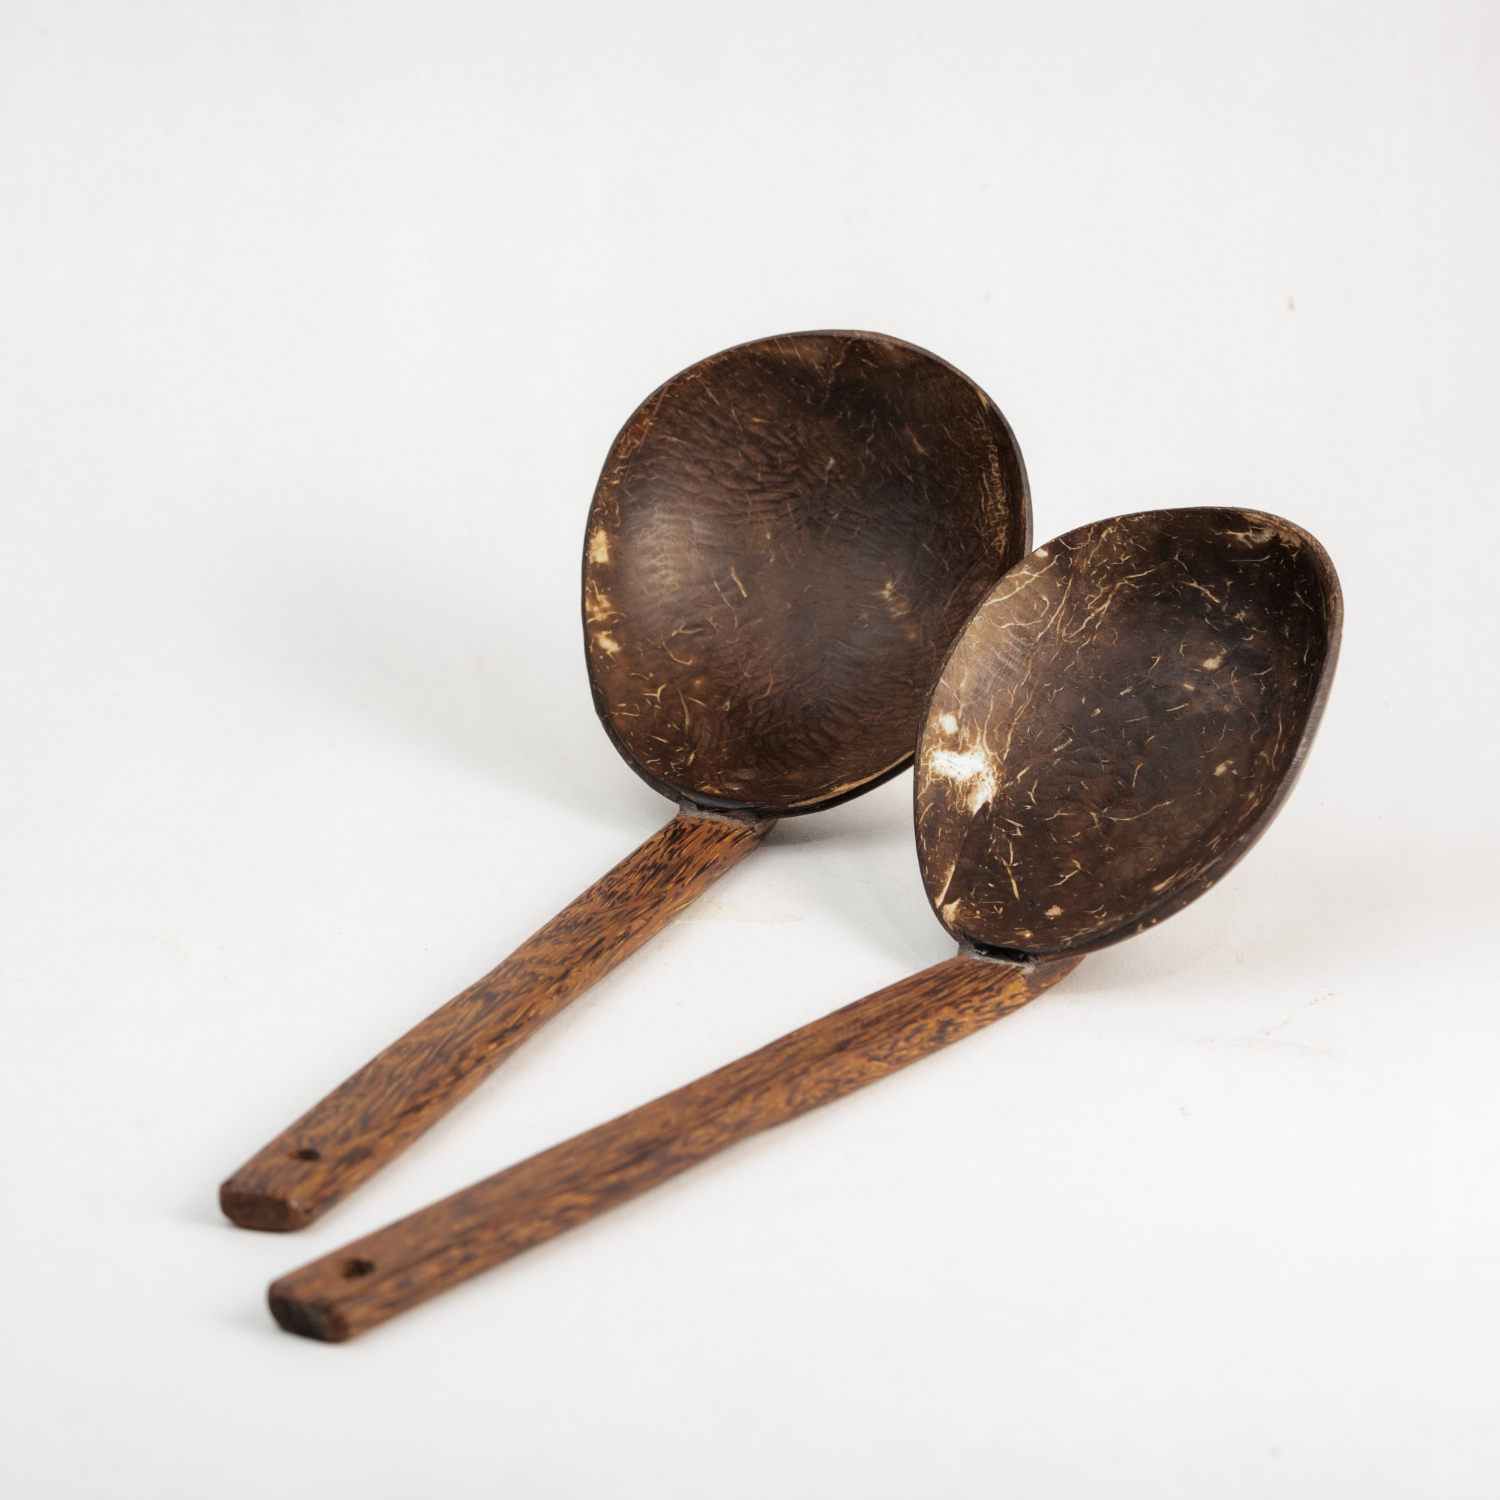 Handmade Coconut Spoon